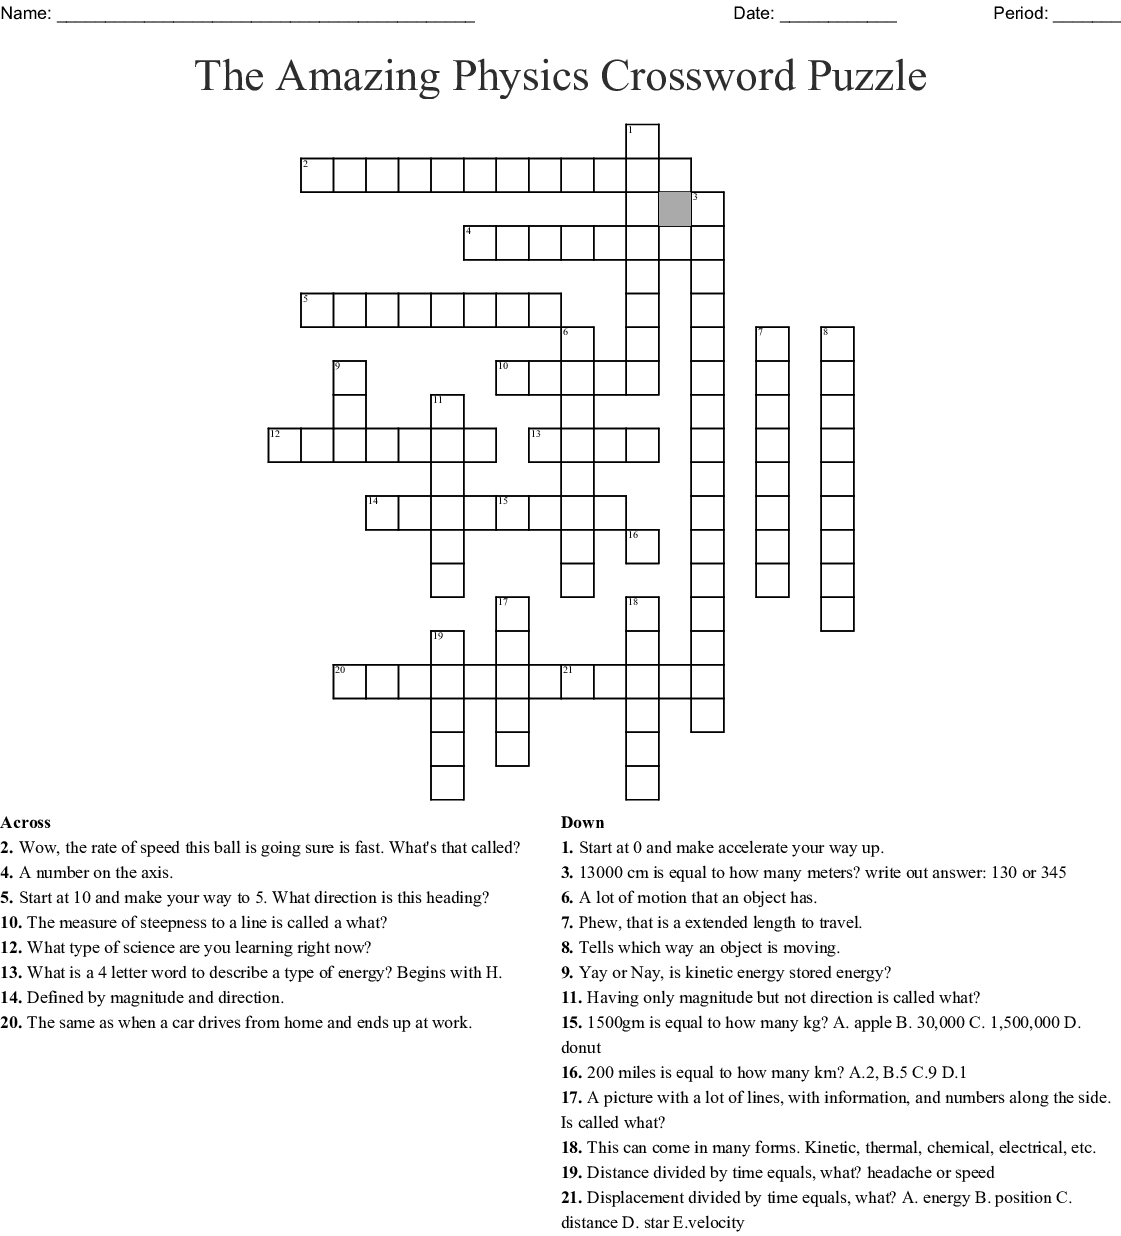 The Amazing Physics Crossword Puzzle Crossword - Wordmint - Physics Crossword Puzzles Printable With Answers